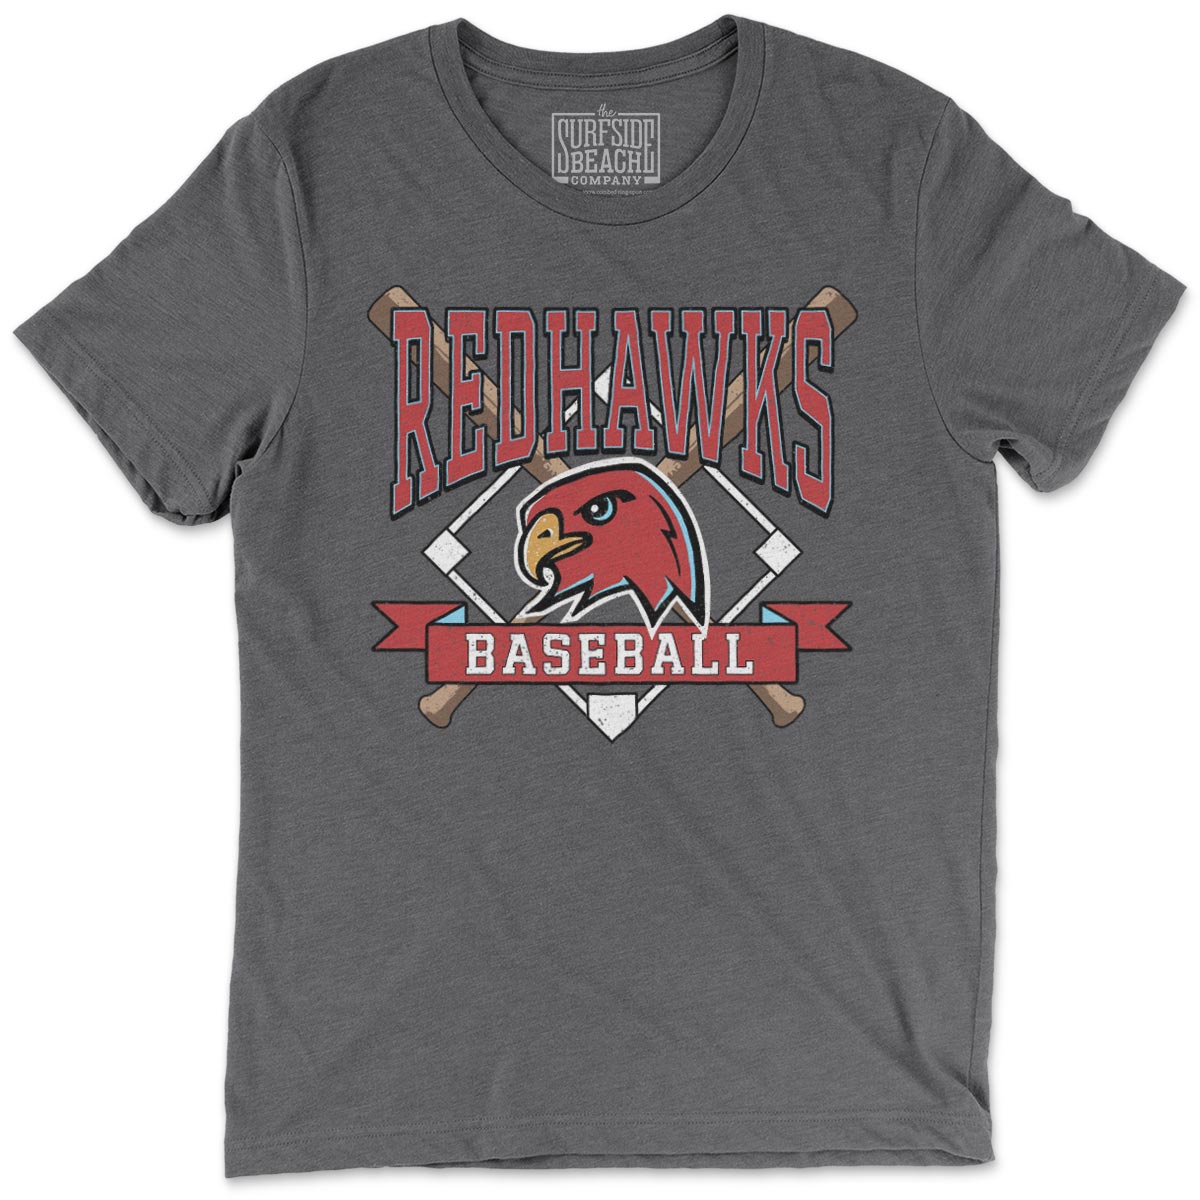 RedHawks Baseball (Bats & Diamond) Unisex T-Shirt